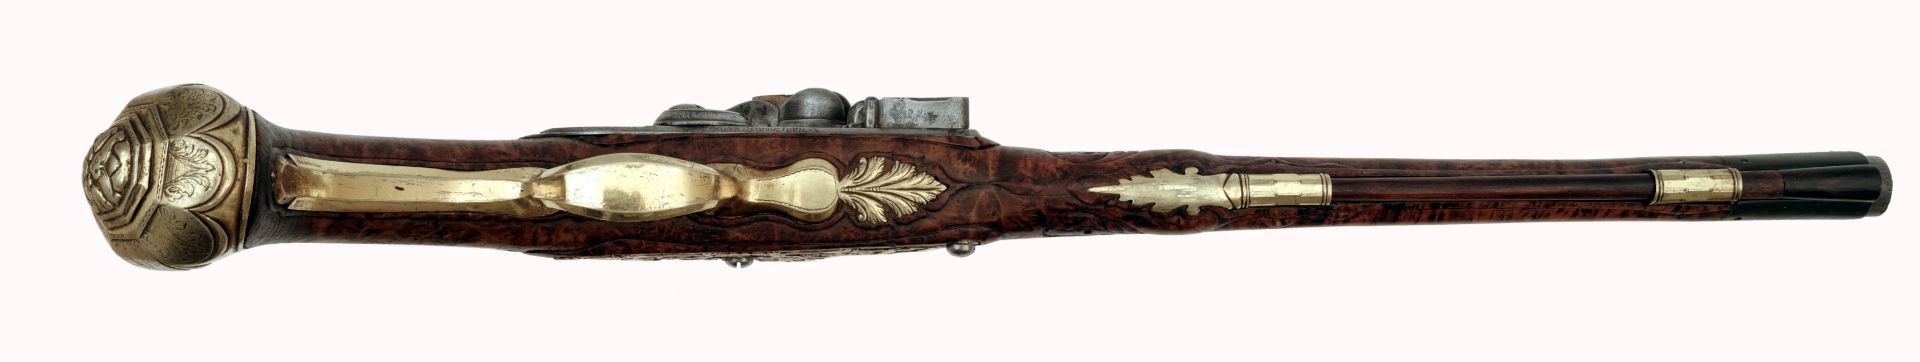 A Long Flintlock Pistol by Joseph Hamerl - Image 4 of 8